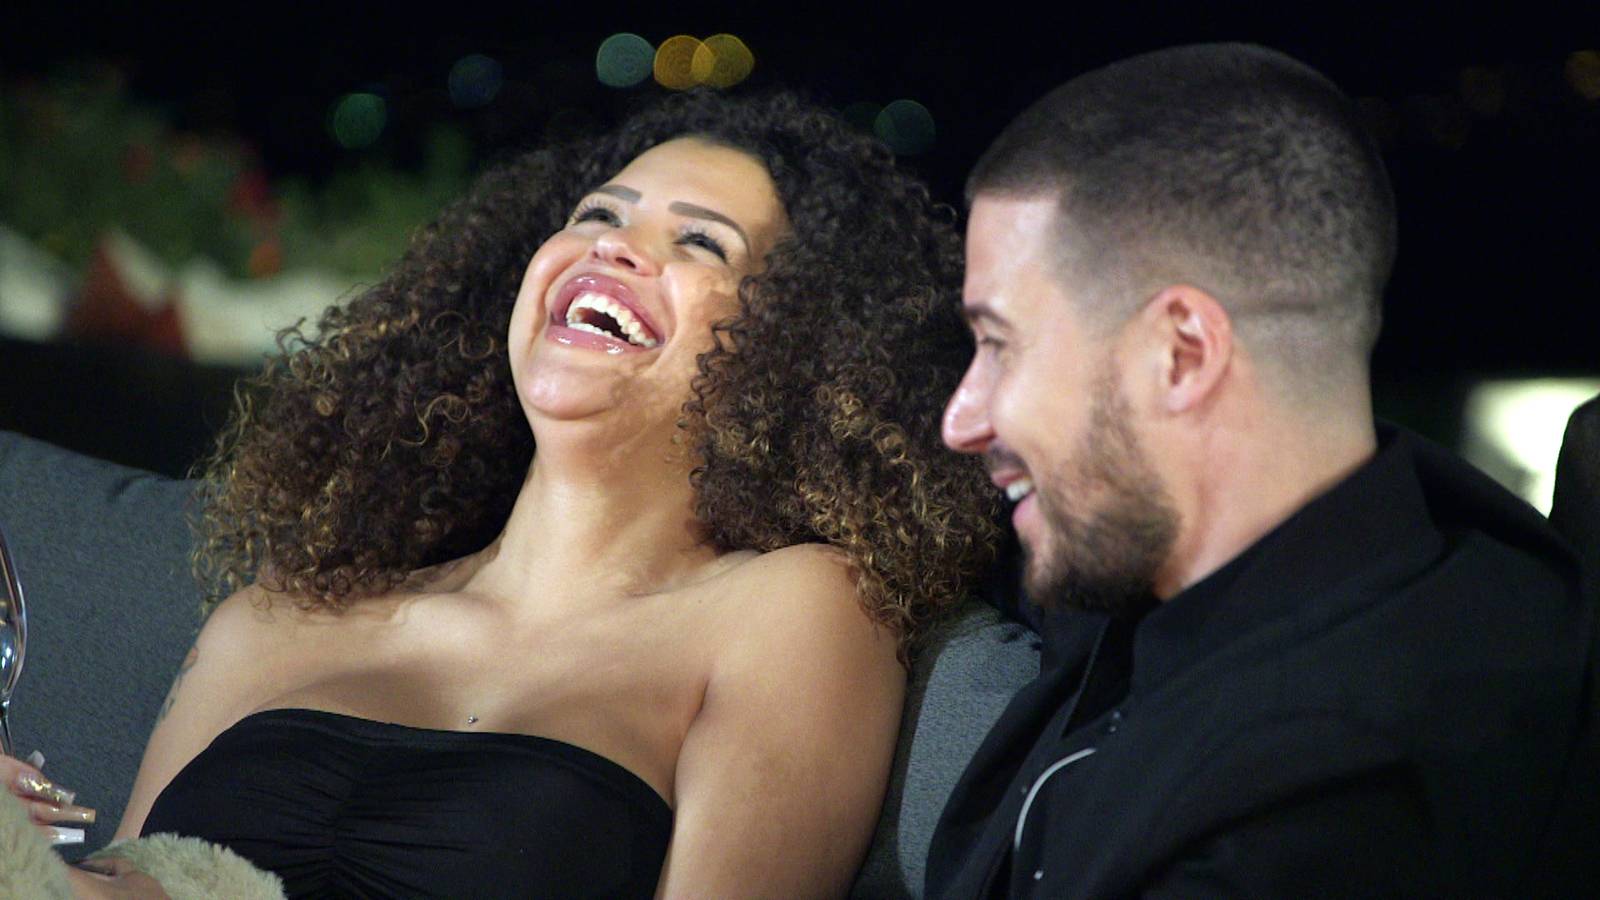 Akielia laughs sitting next to Vinny Guadagnino on 'Double Shot at Love' Season 3